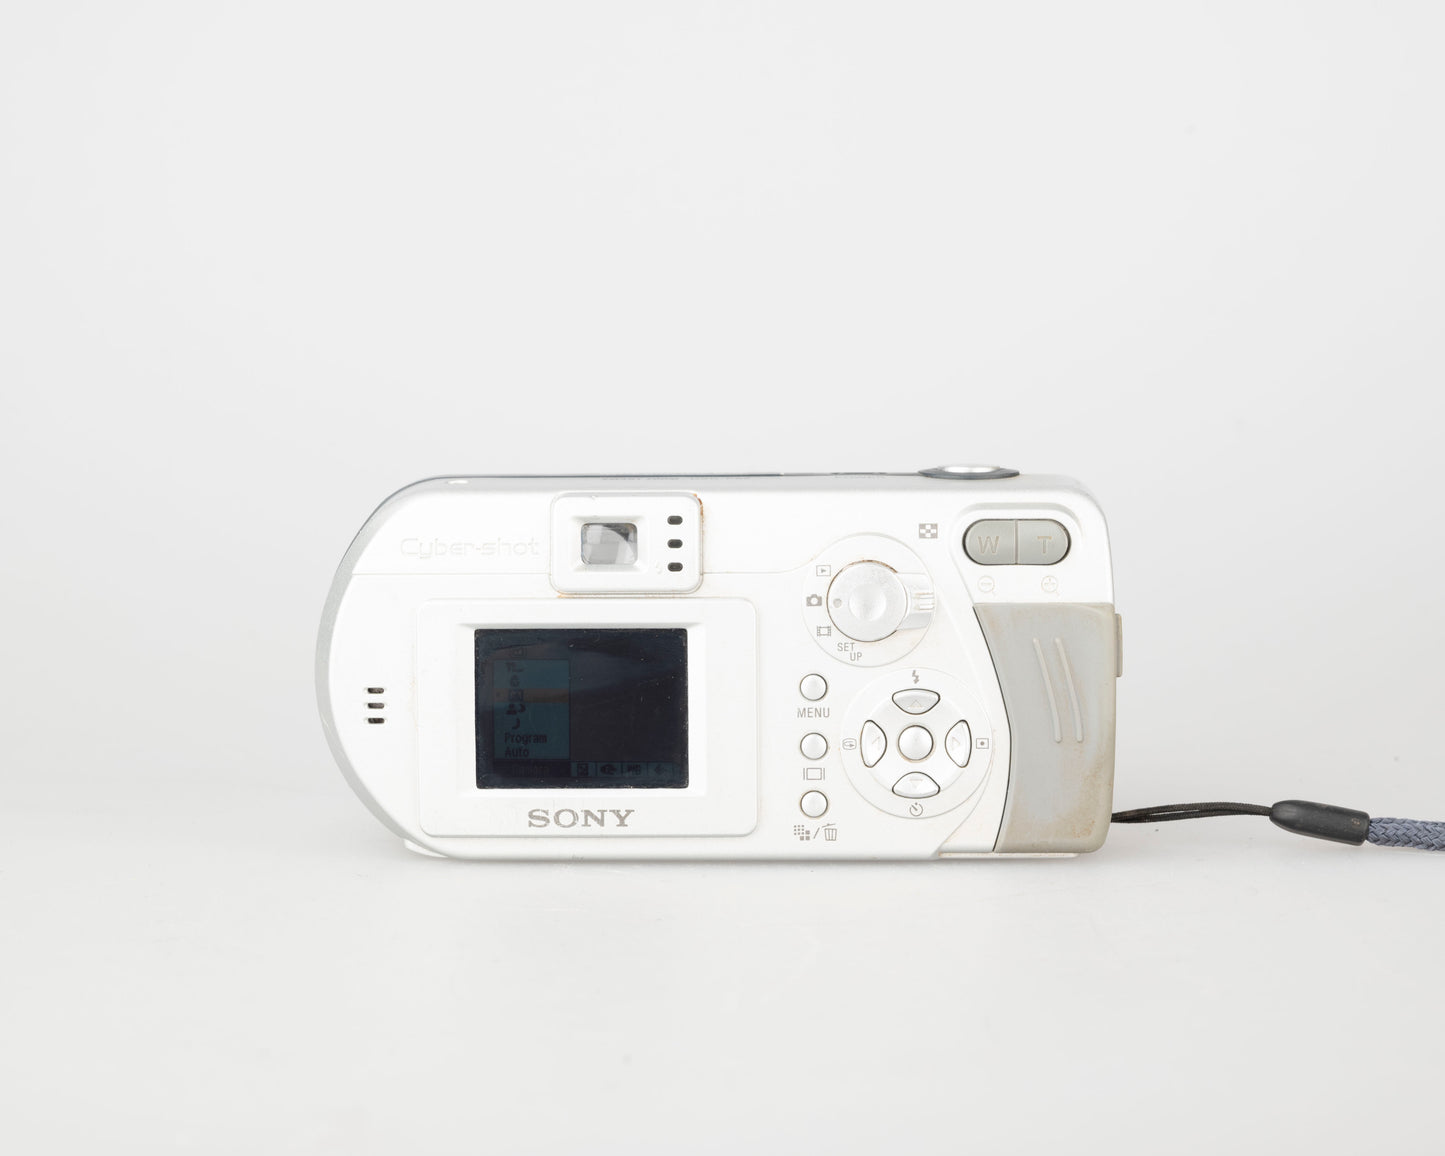 Sony Cyber-Shot DSC-P52 3.1 MP CCD sensor digicam w/ 16MB Memory Stick card (uses AA batteries)